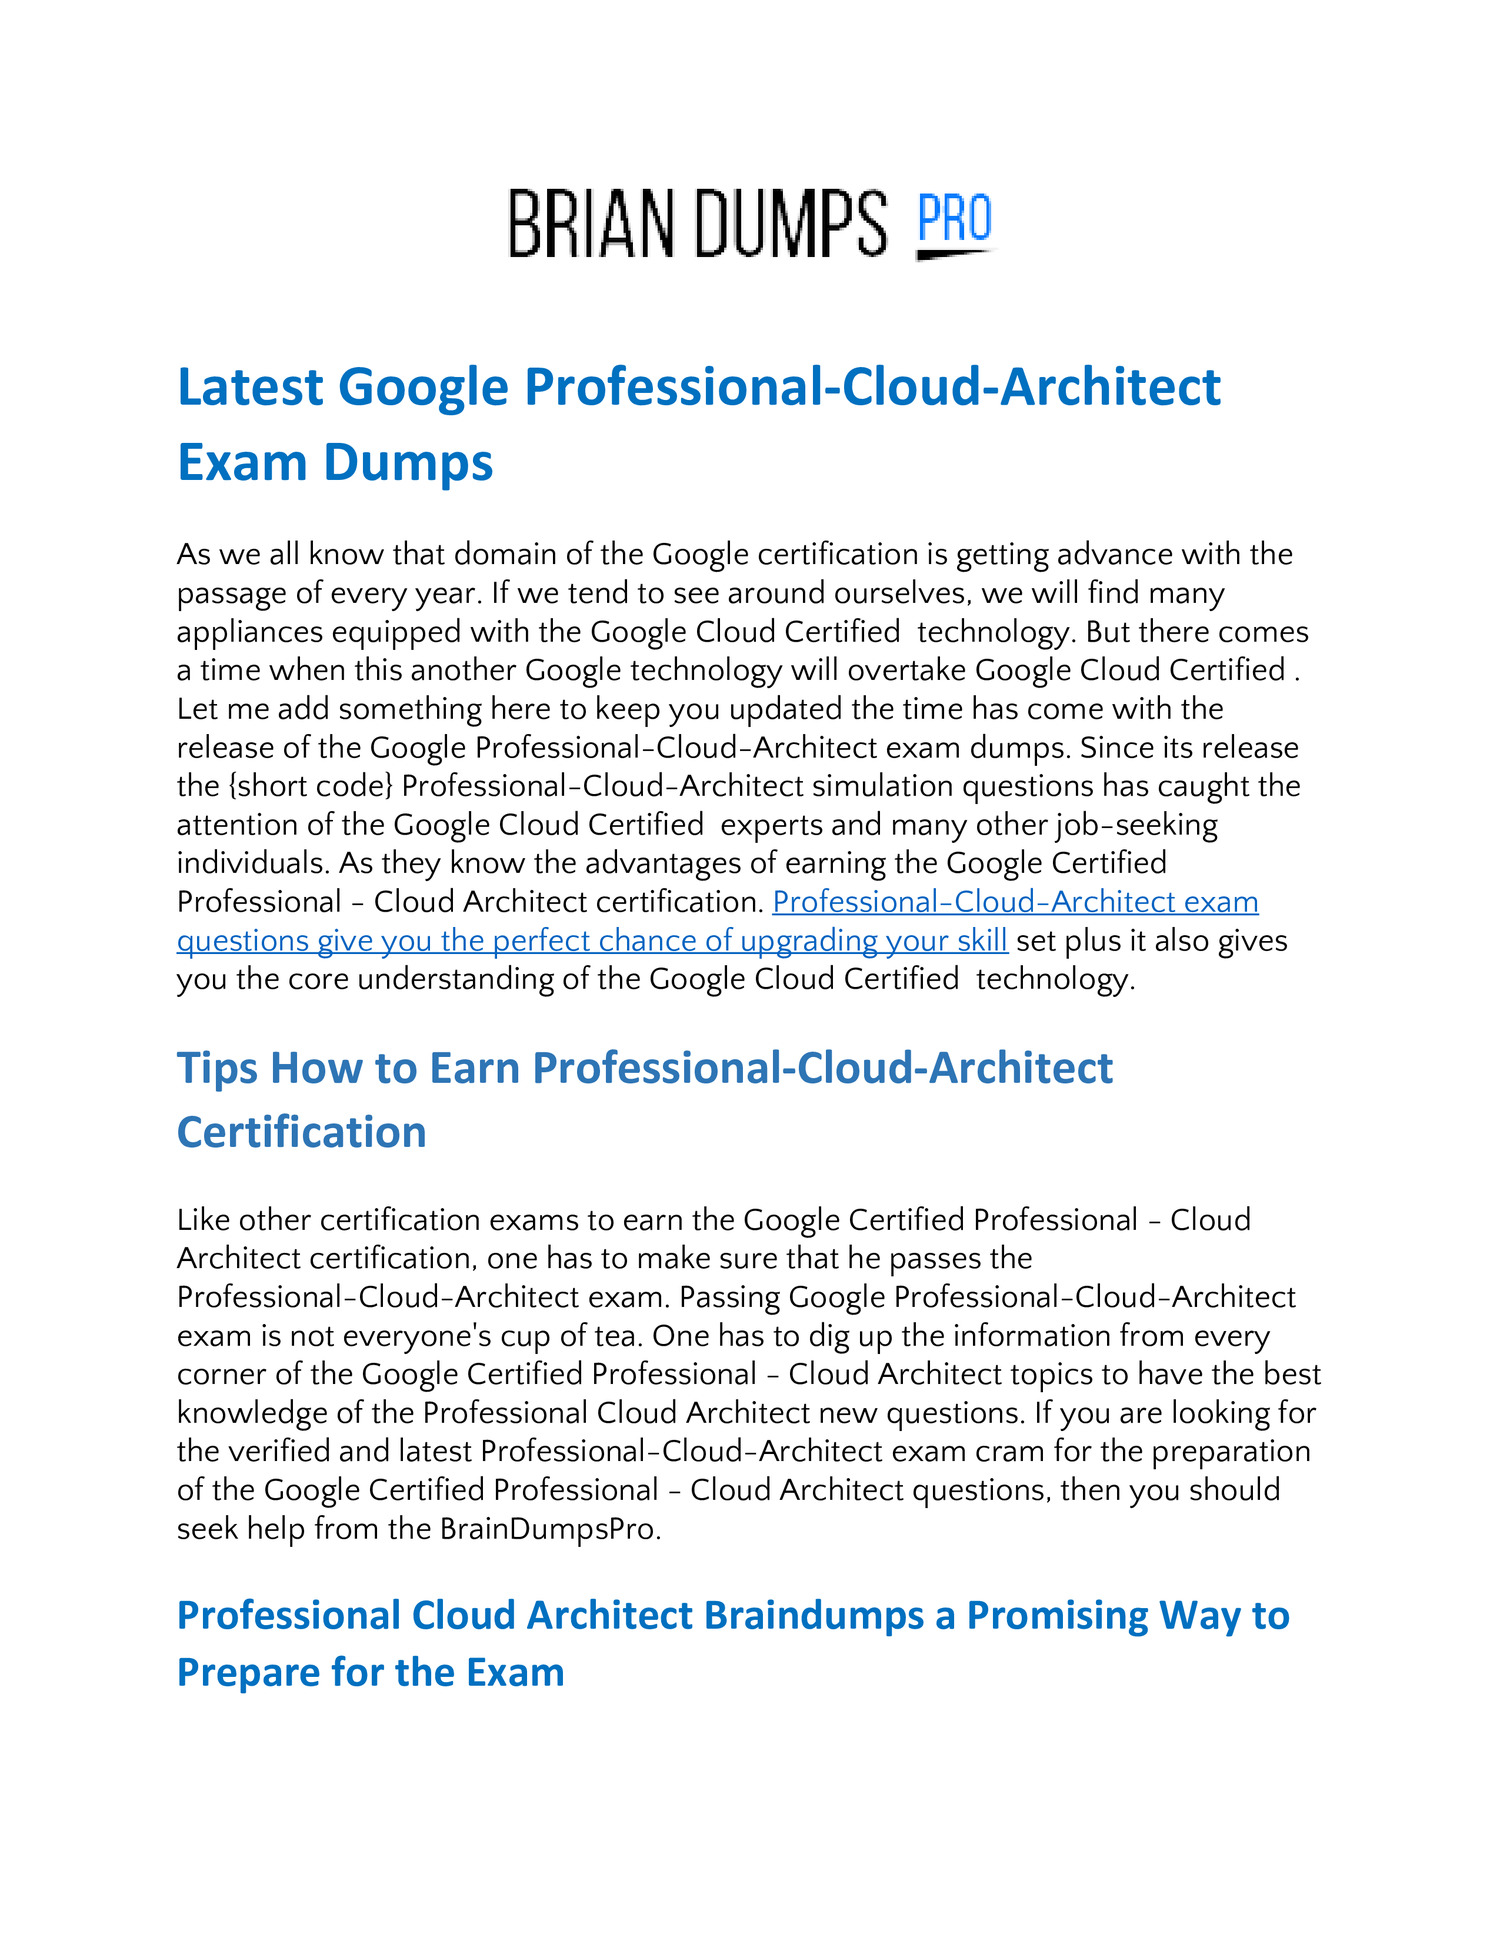 Professional-Cloud-Architect Test Simulator Free